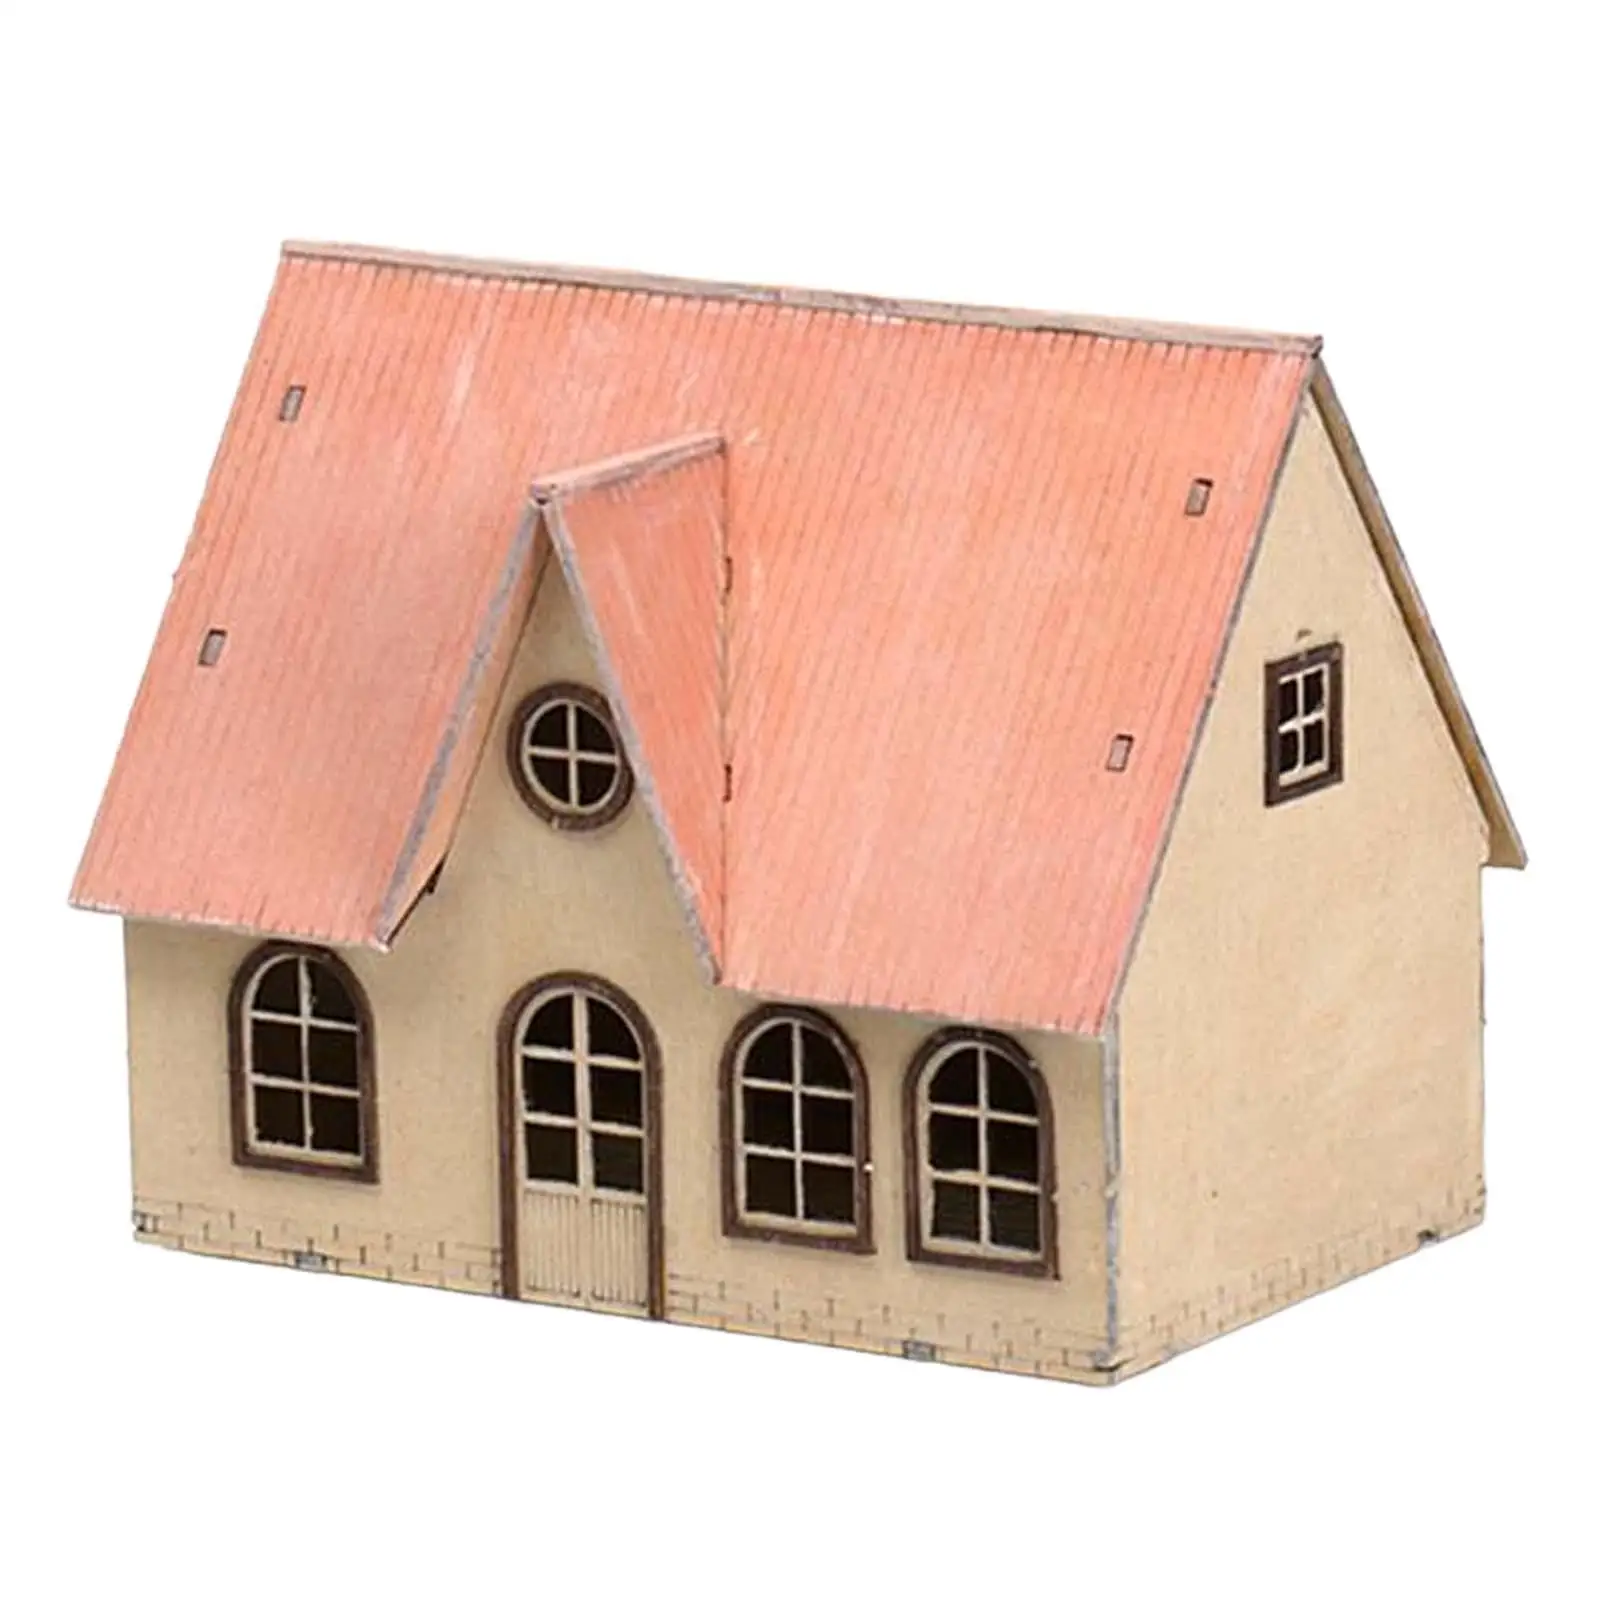 1/72 Miniature Wooden European Town House Architecture Scene Model for Model Railway Diorama Micro Landscape Layout Accessory